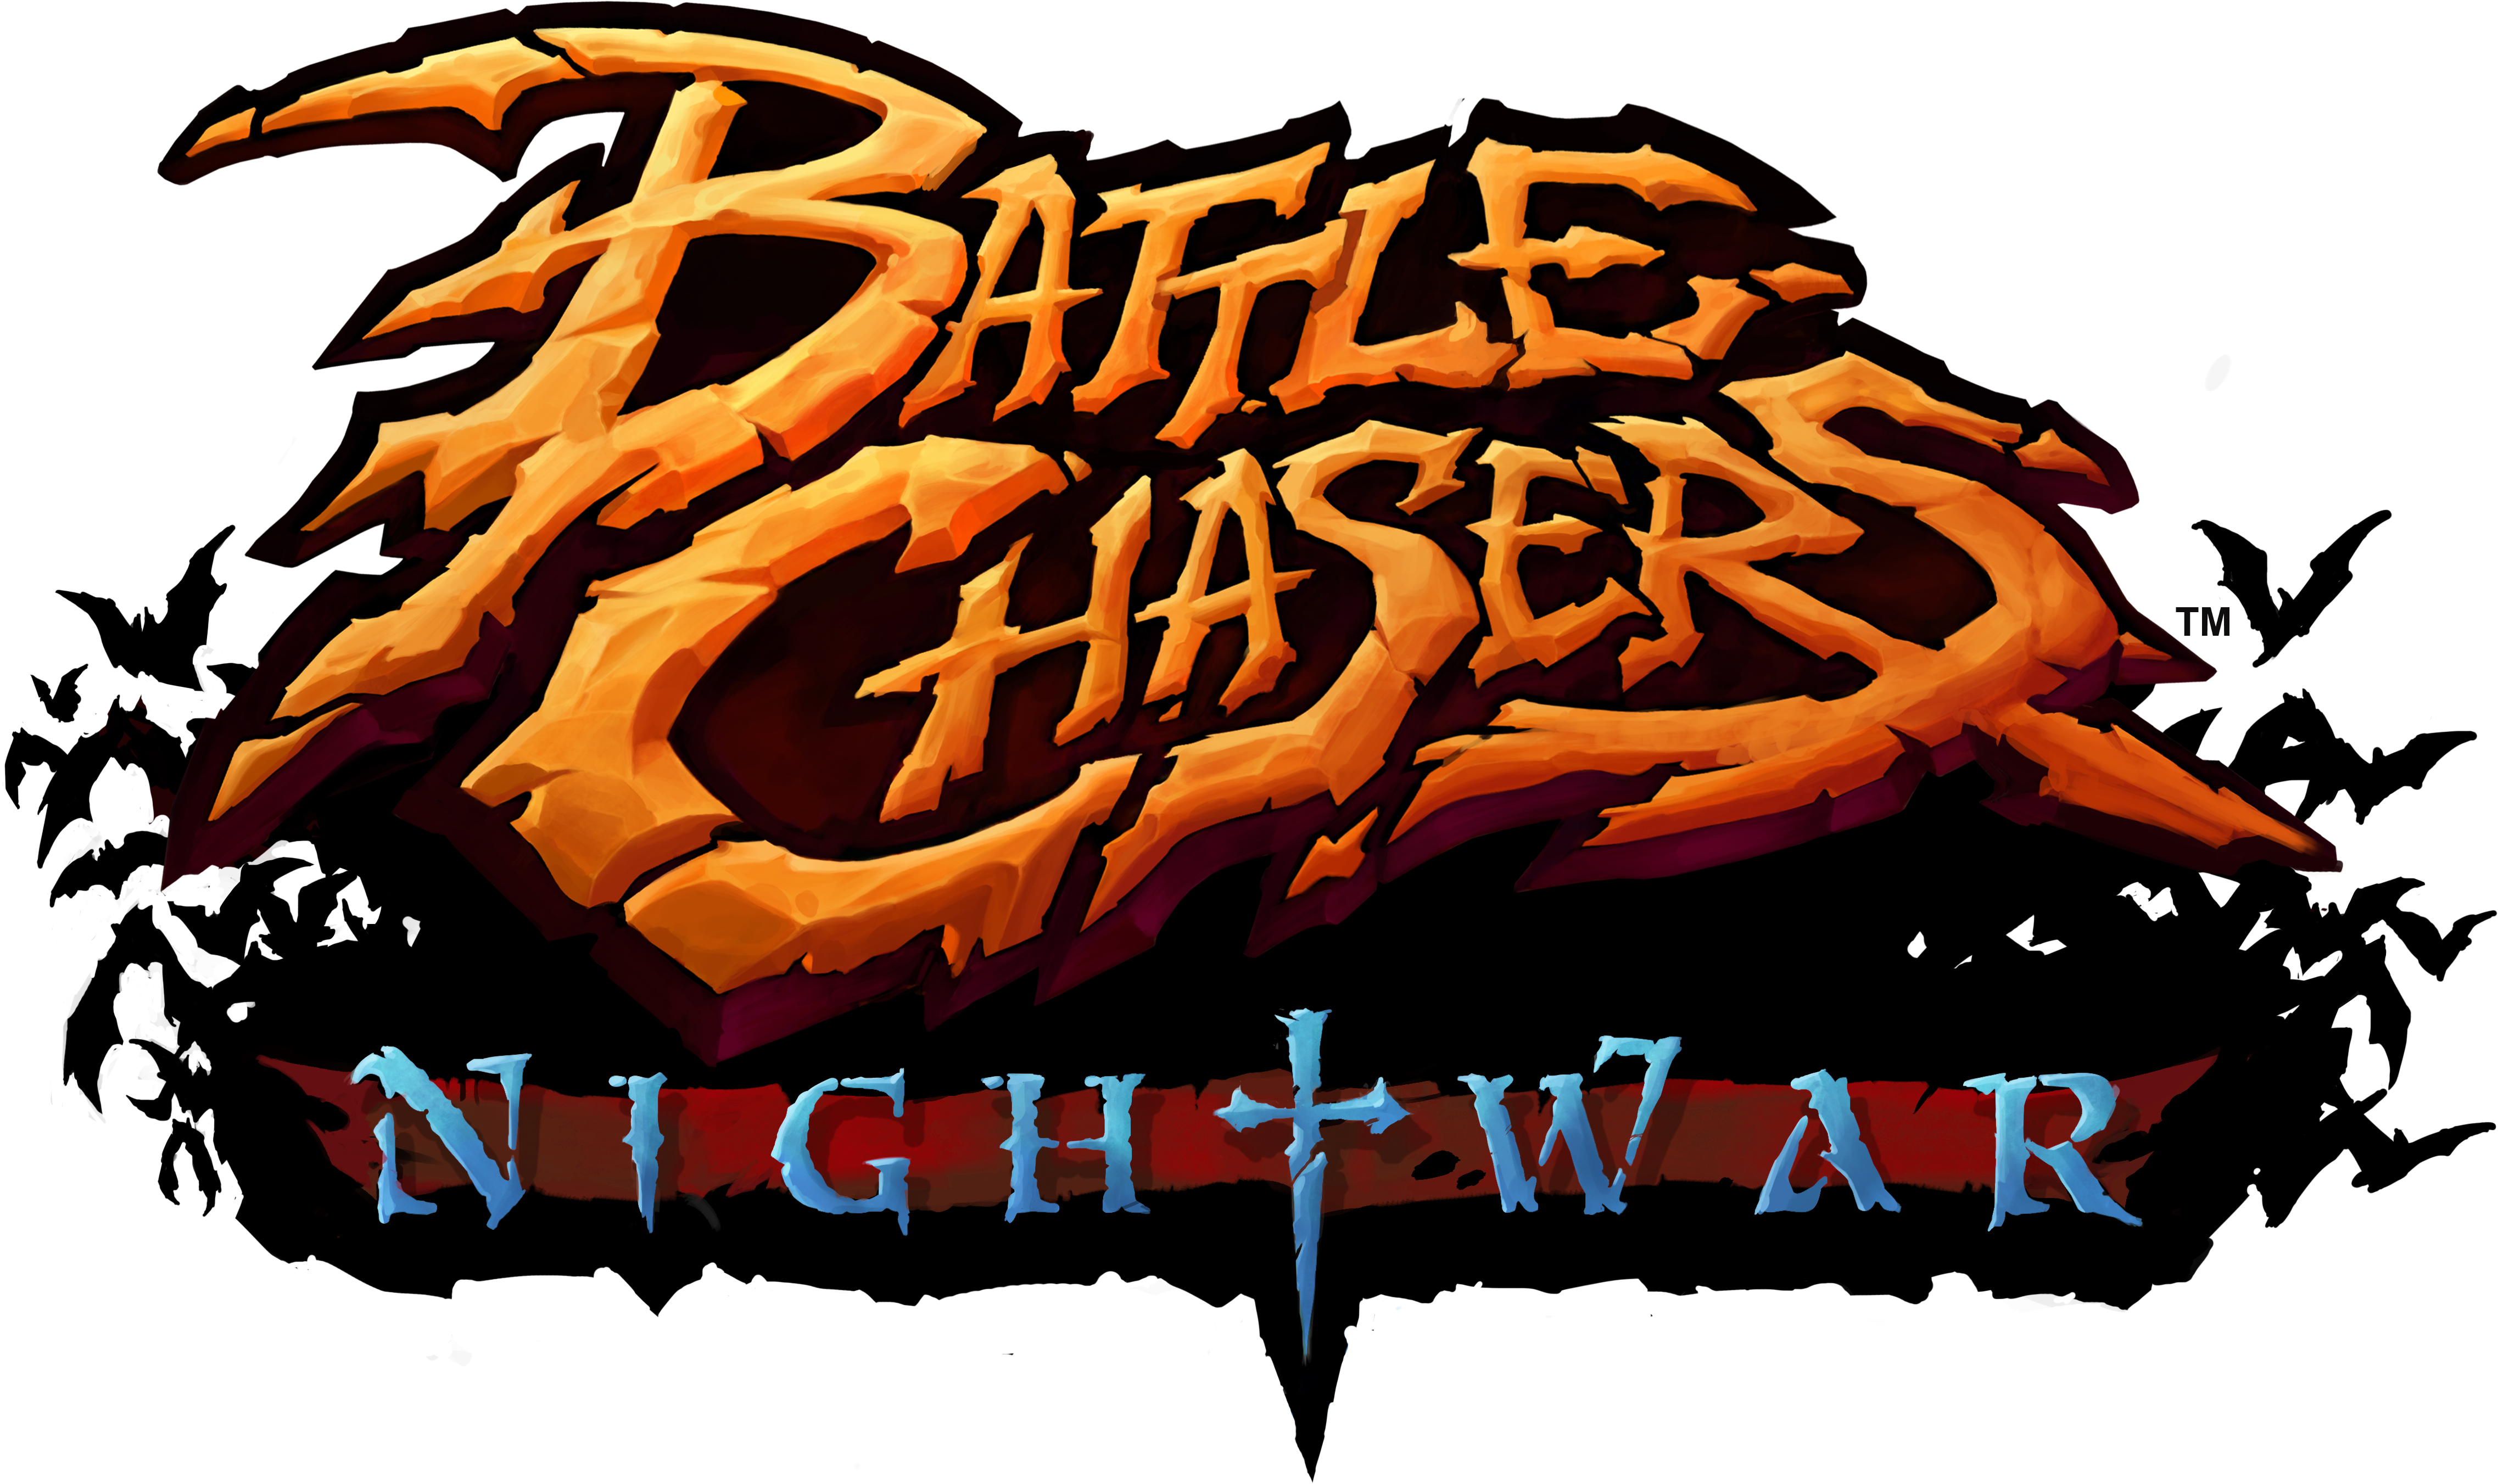 Nightwar Logo V2 - Nordic Games Battle Chasers Nightwar (5244x3288), Png Download